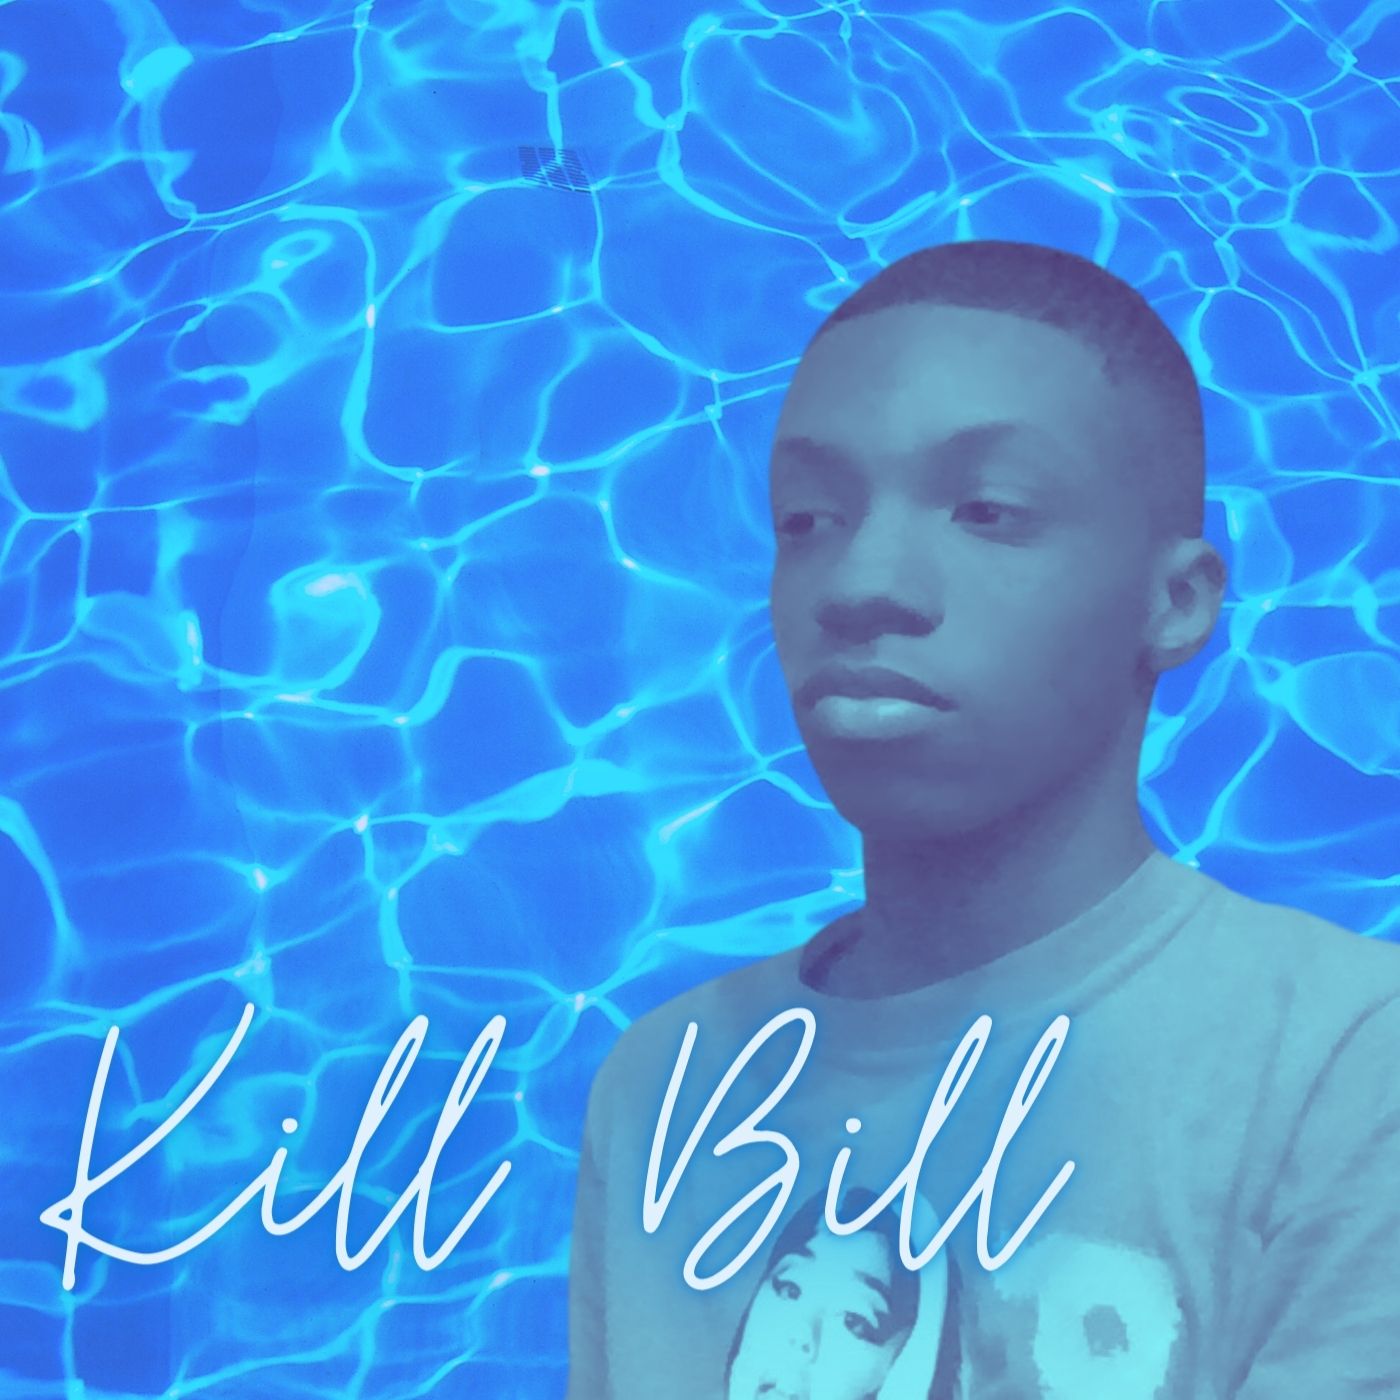 Cameron Reid ft. featuring Ariankah kill bill cover artwork